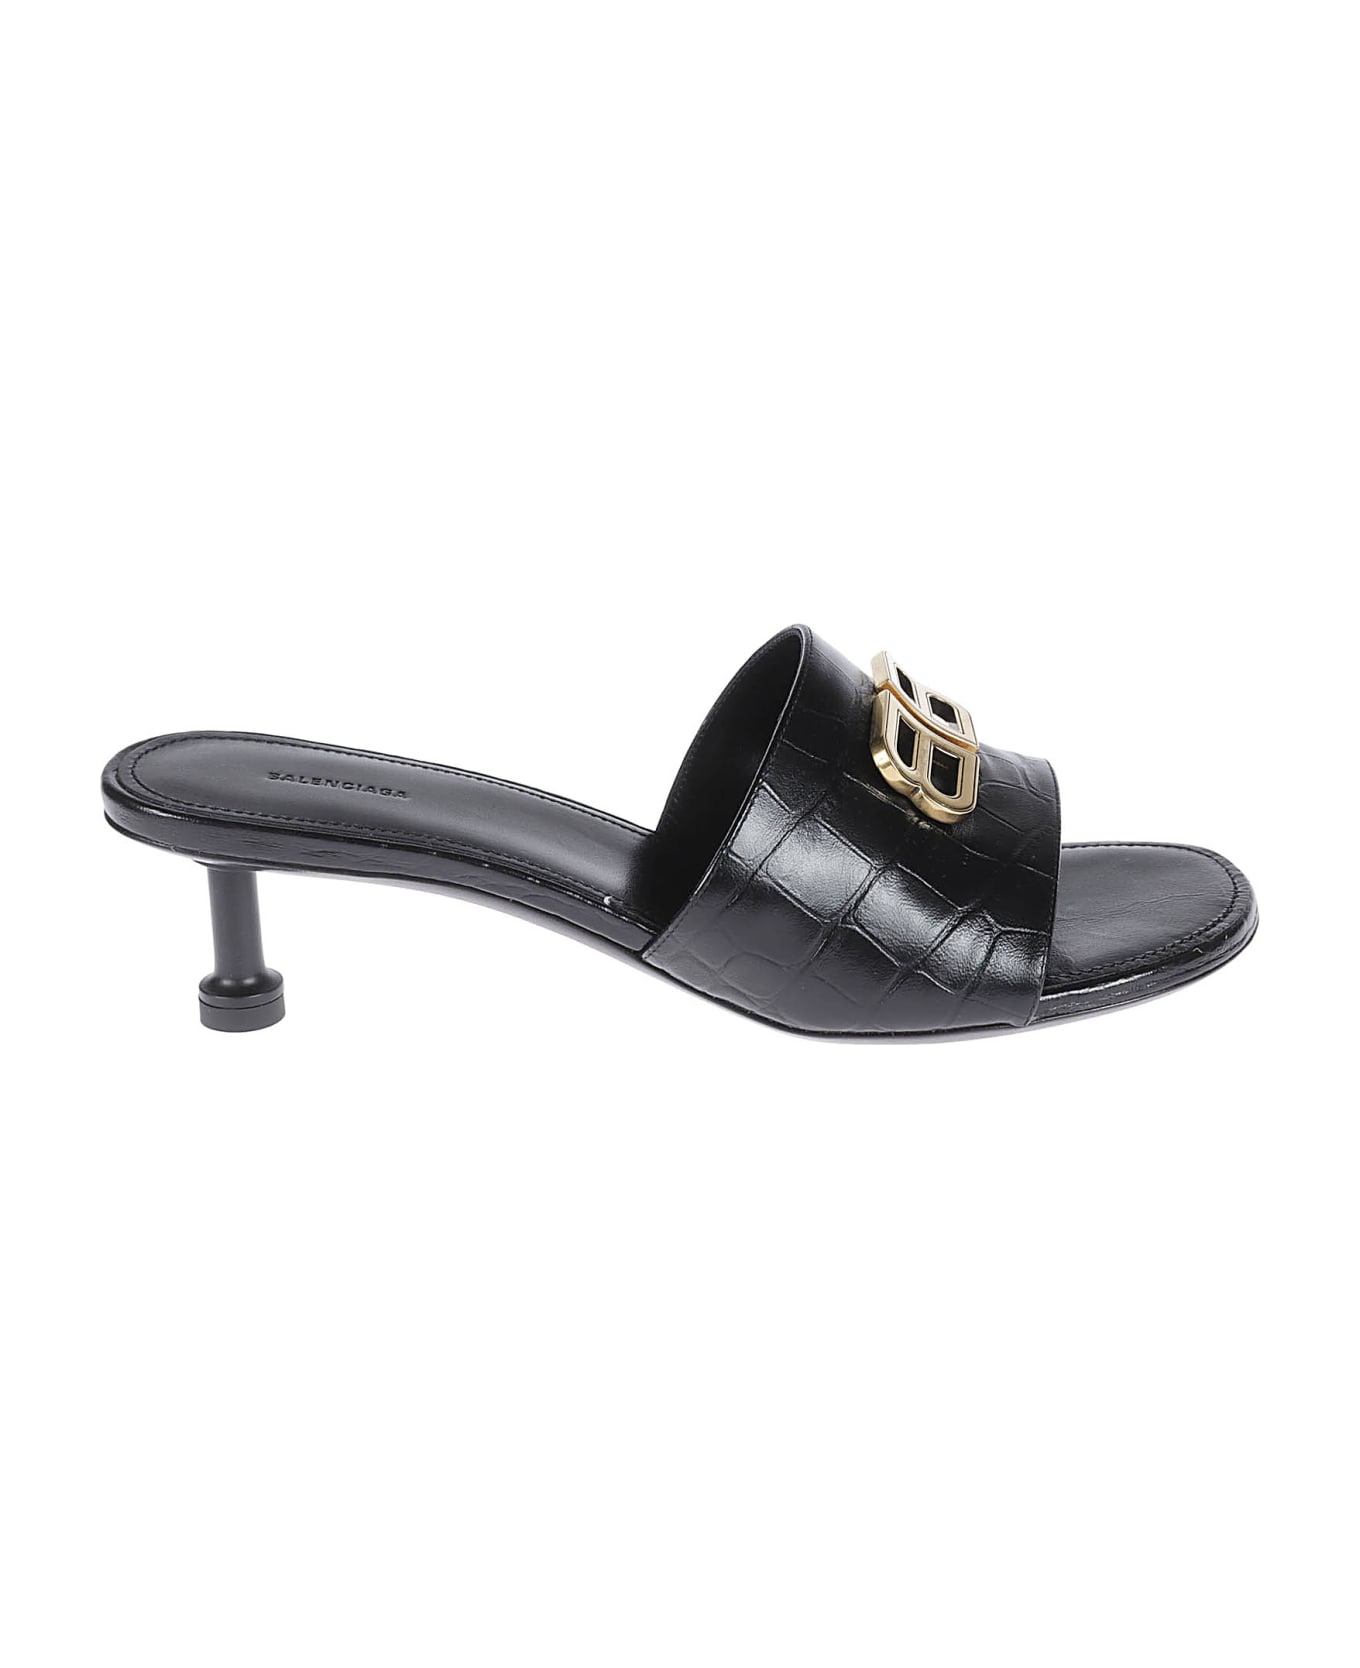 Balenciaga Groupie Sandals - Black/Gold